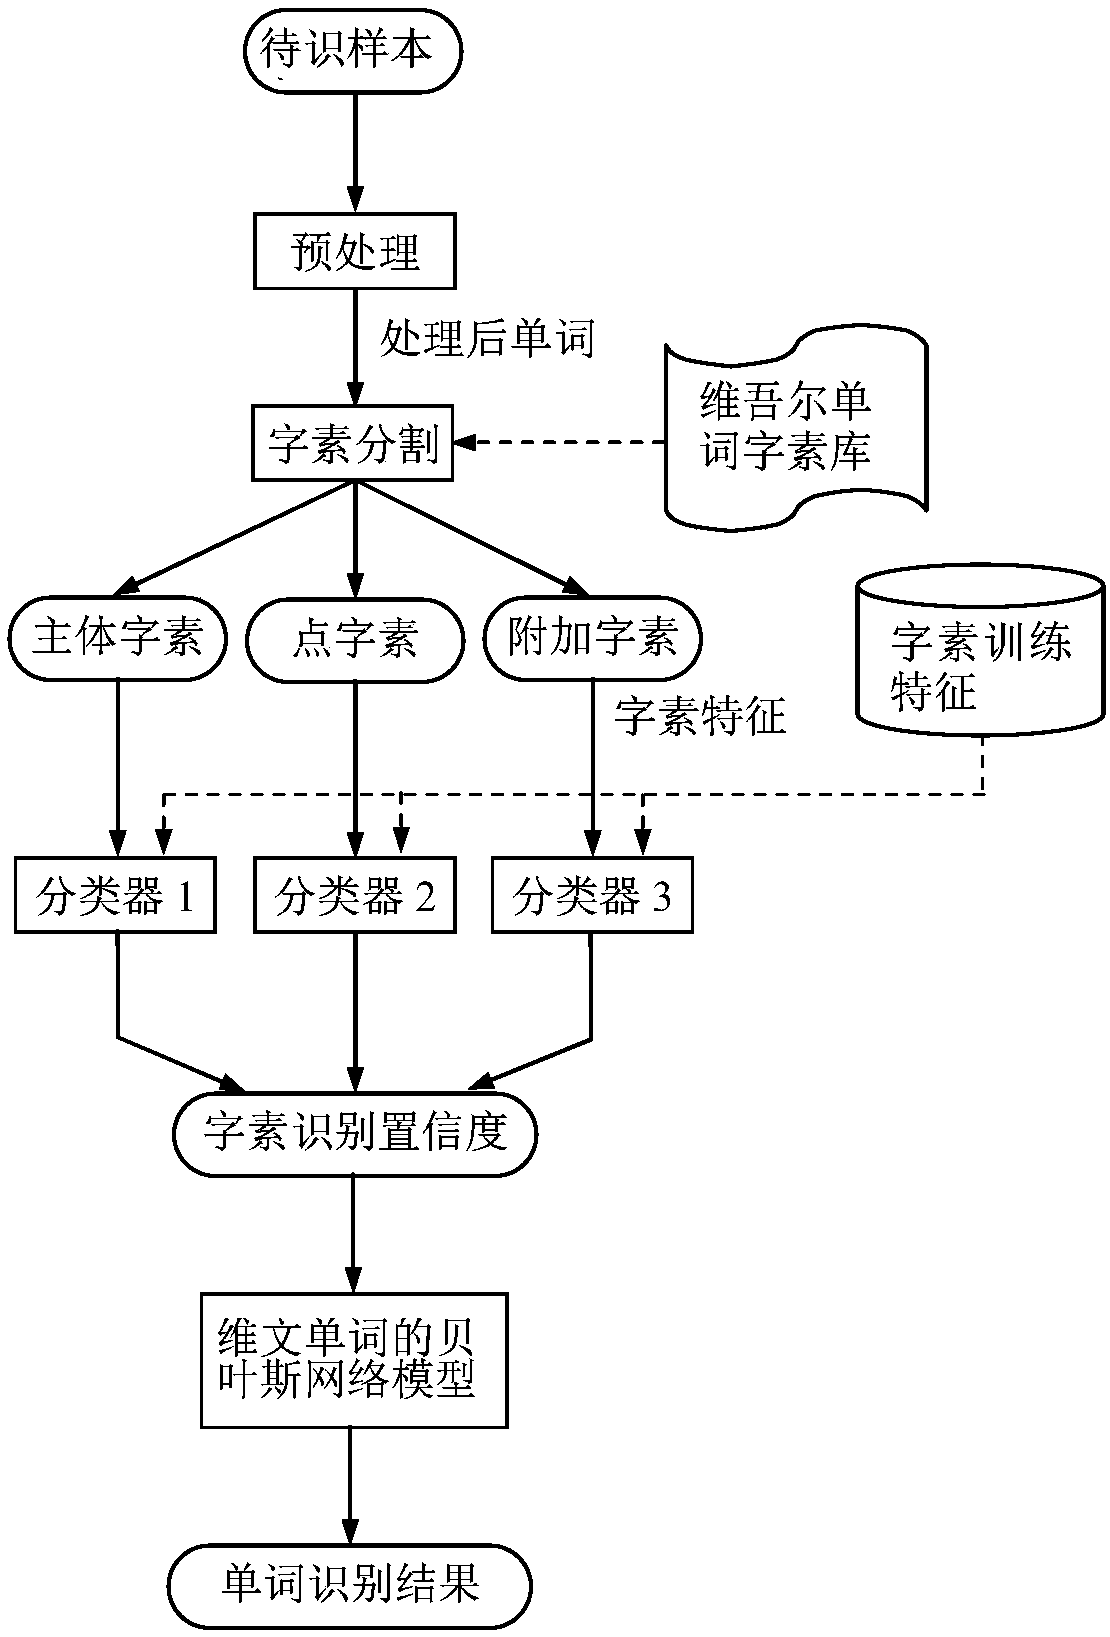 Computer-based offline handwritten Uyghur word recognition method based on word segmentation